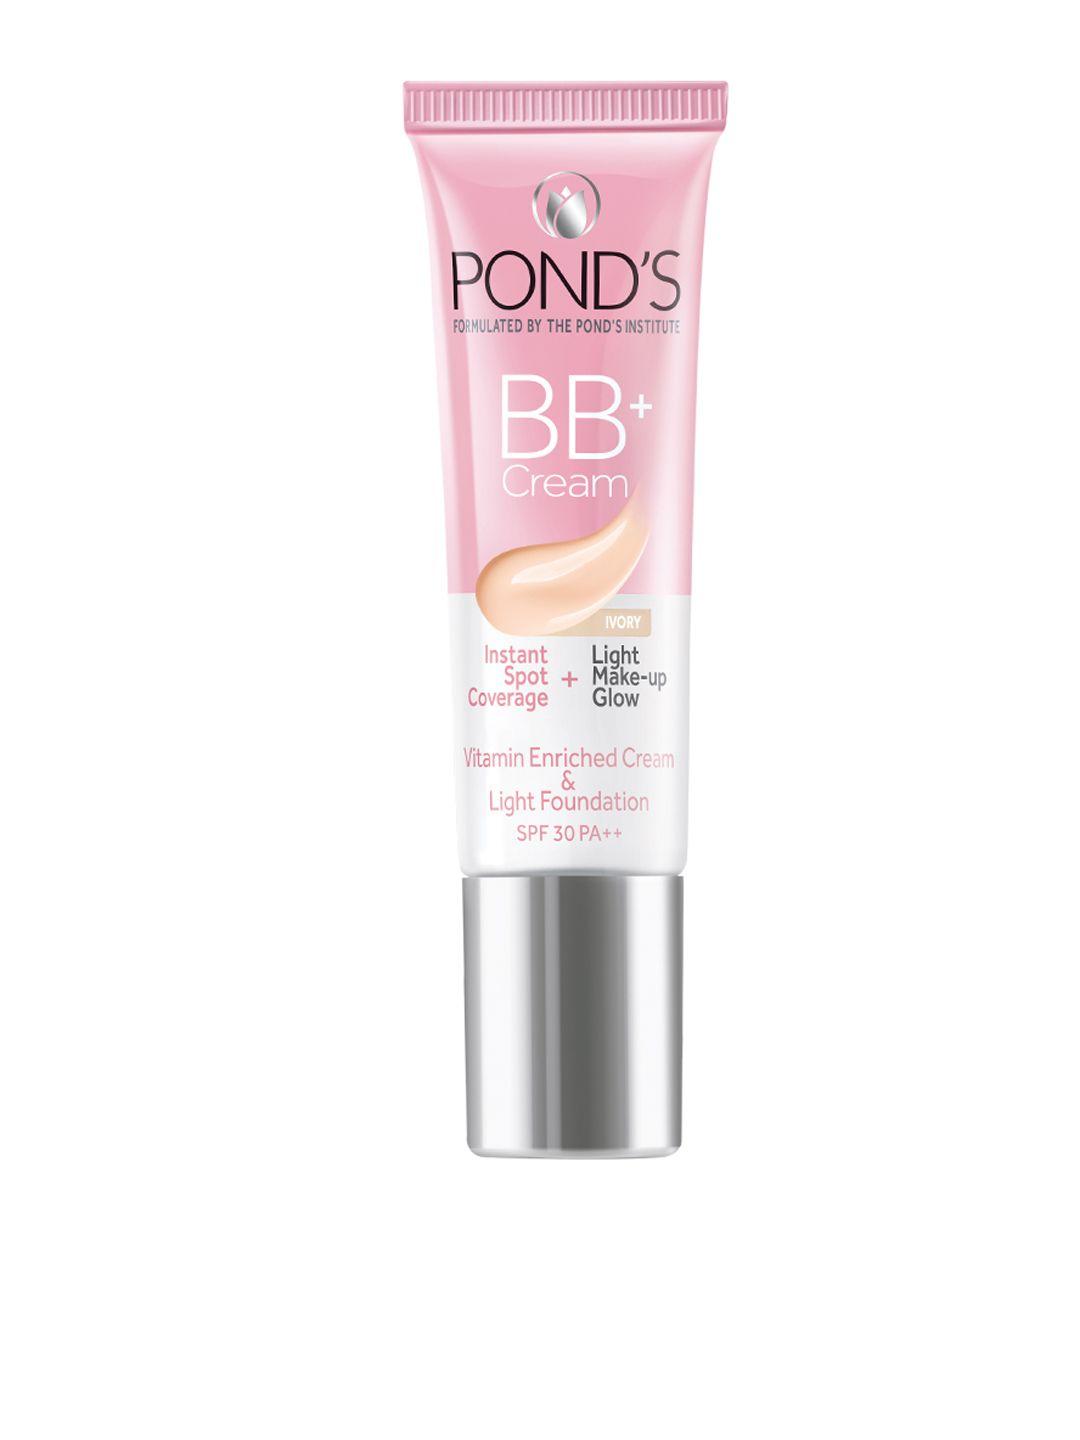 pond's bb+ cream instant spot coverage + natural glow 01 original 9 gm